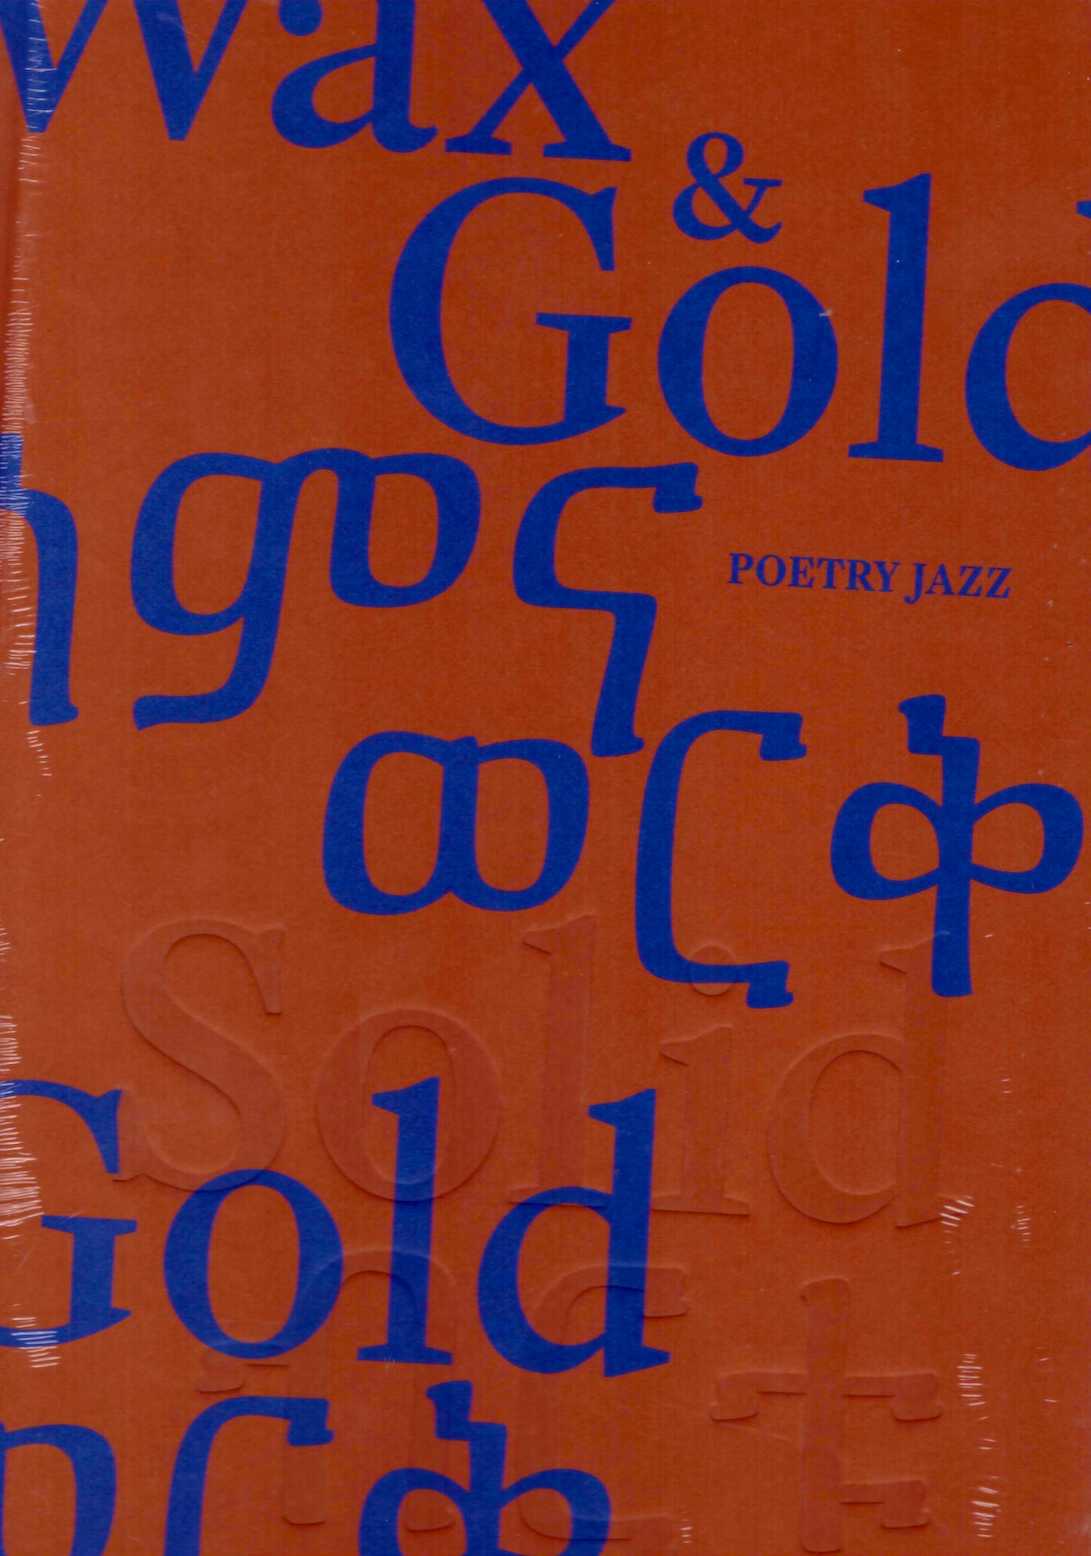 INSTITUT FÜR RAUMEXPERIMENTE; TOBIYA POETIC JAZZ (eds.) - Poetry Jazz: Wax and Gold